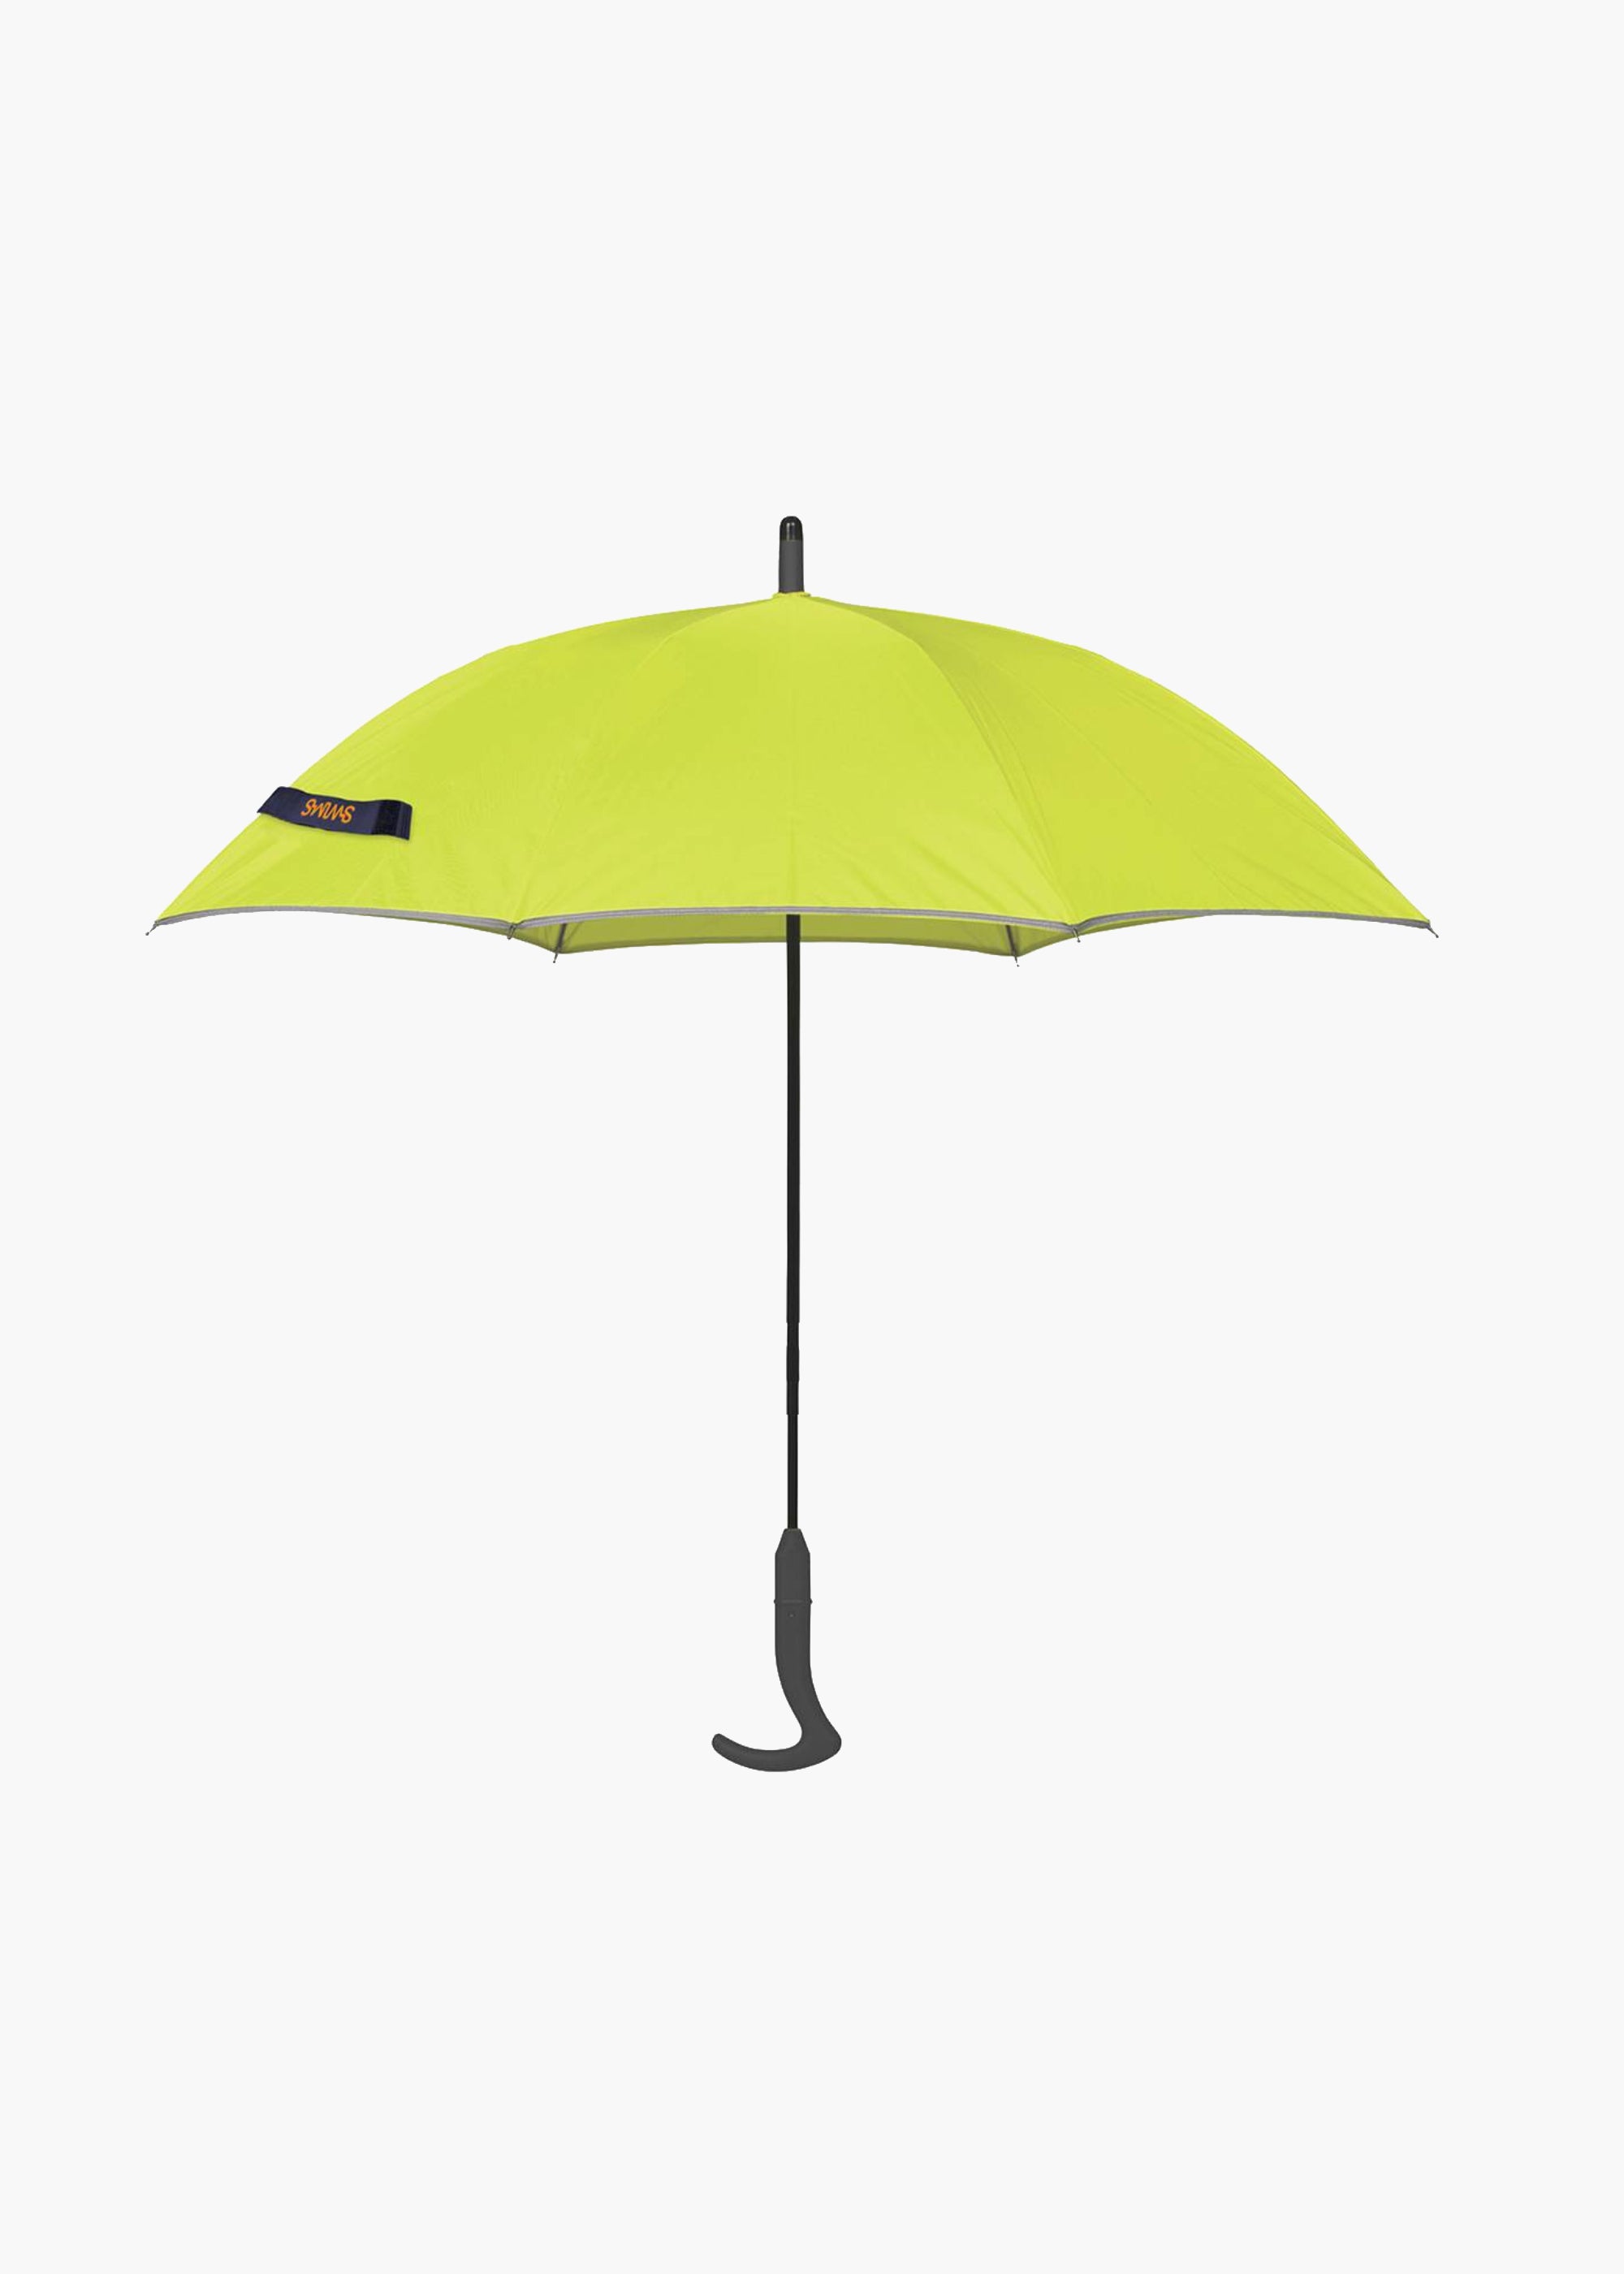 Umbrella Long - background::white,variant::Lime